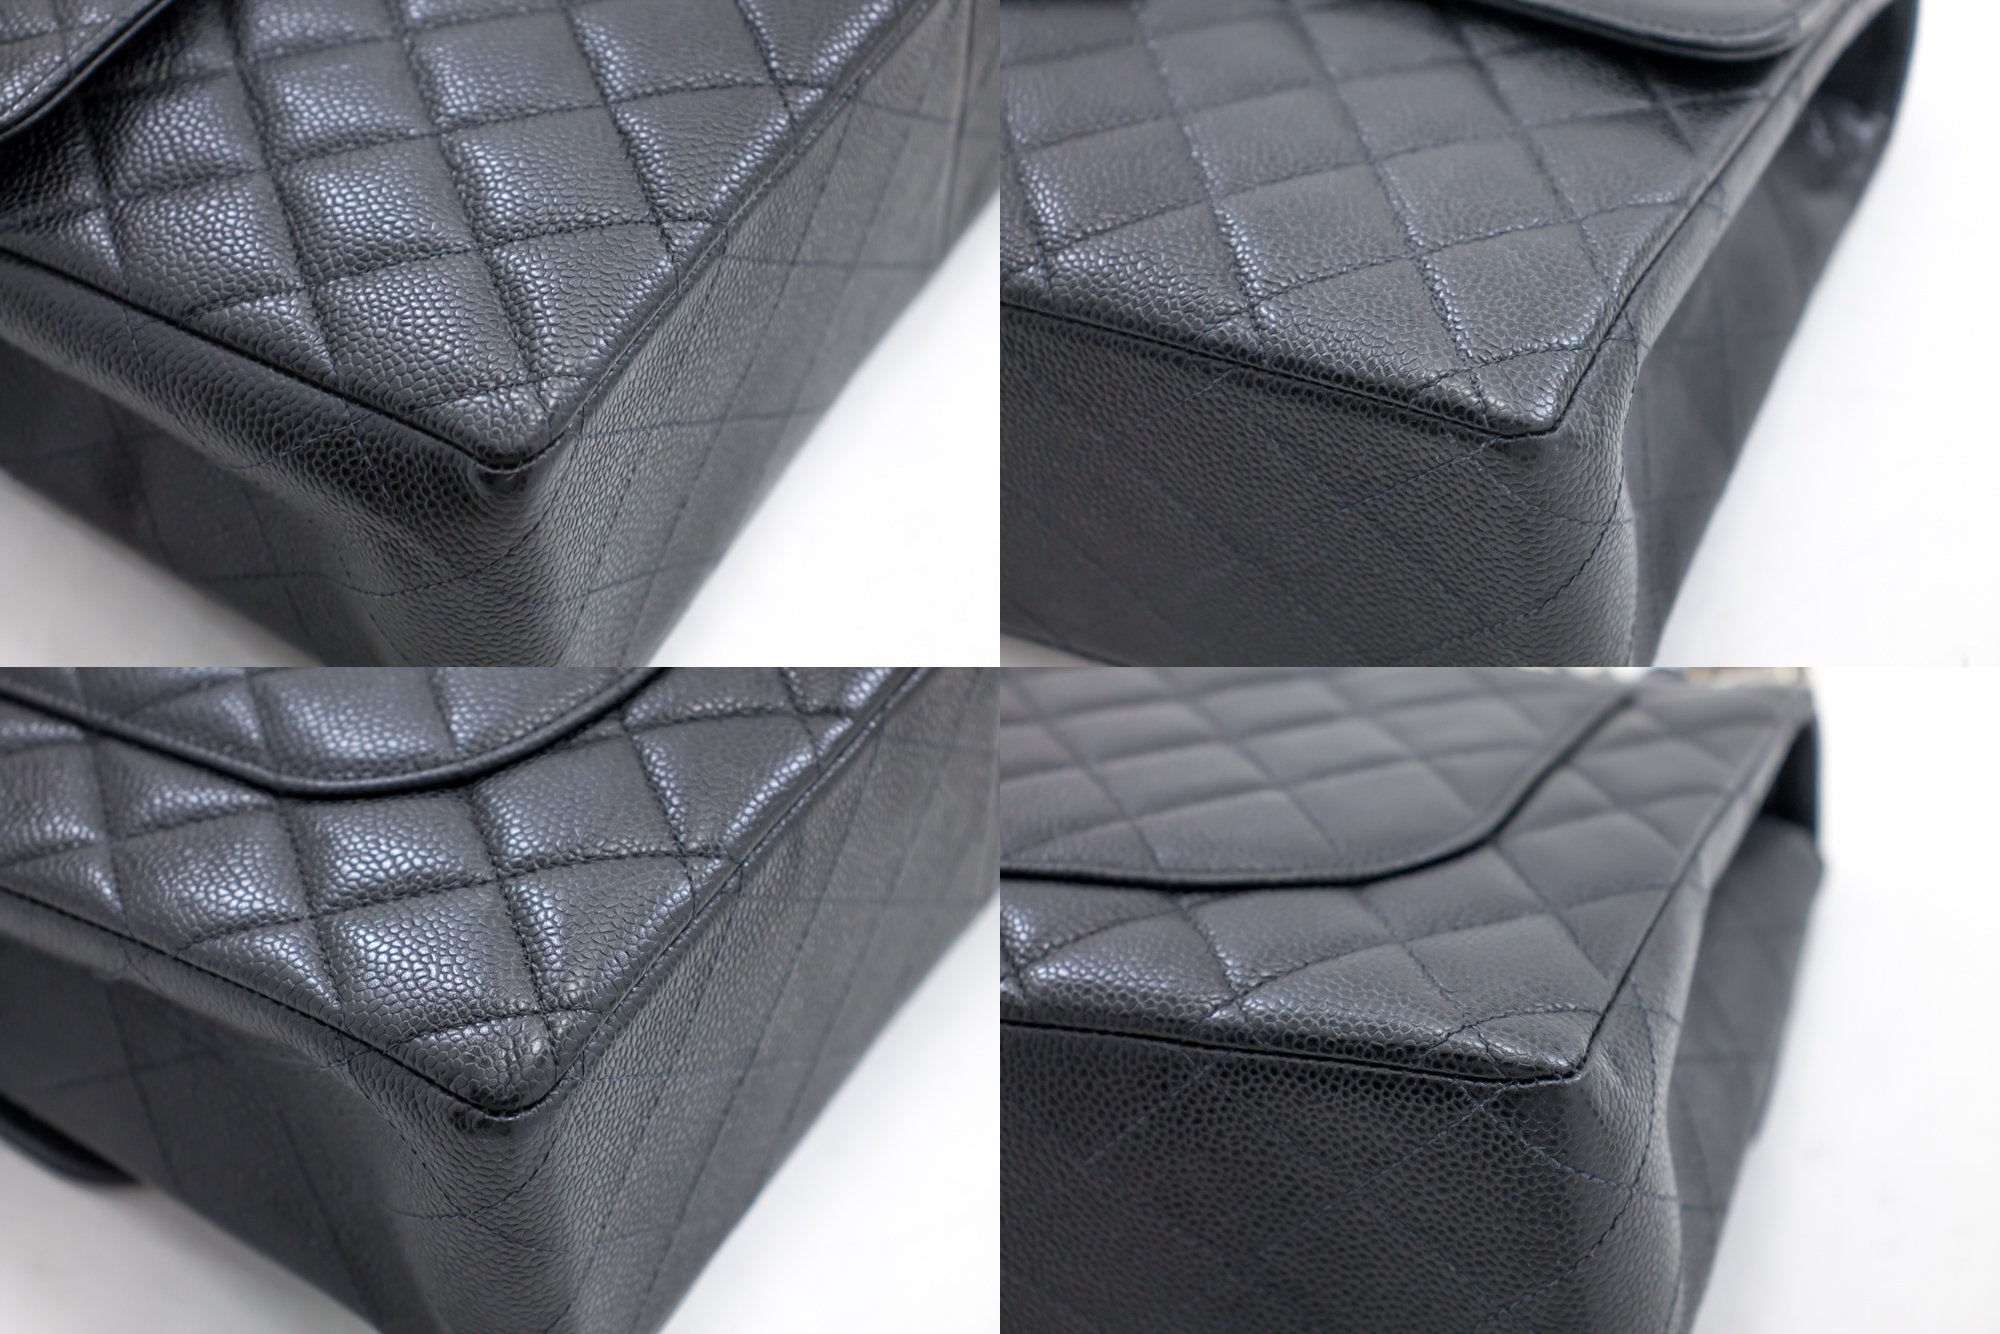 CHANEL Classic Double Flap 10 Chain Shoulder Bag Black Lambskin i84 –  hannari-shop